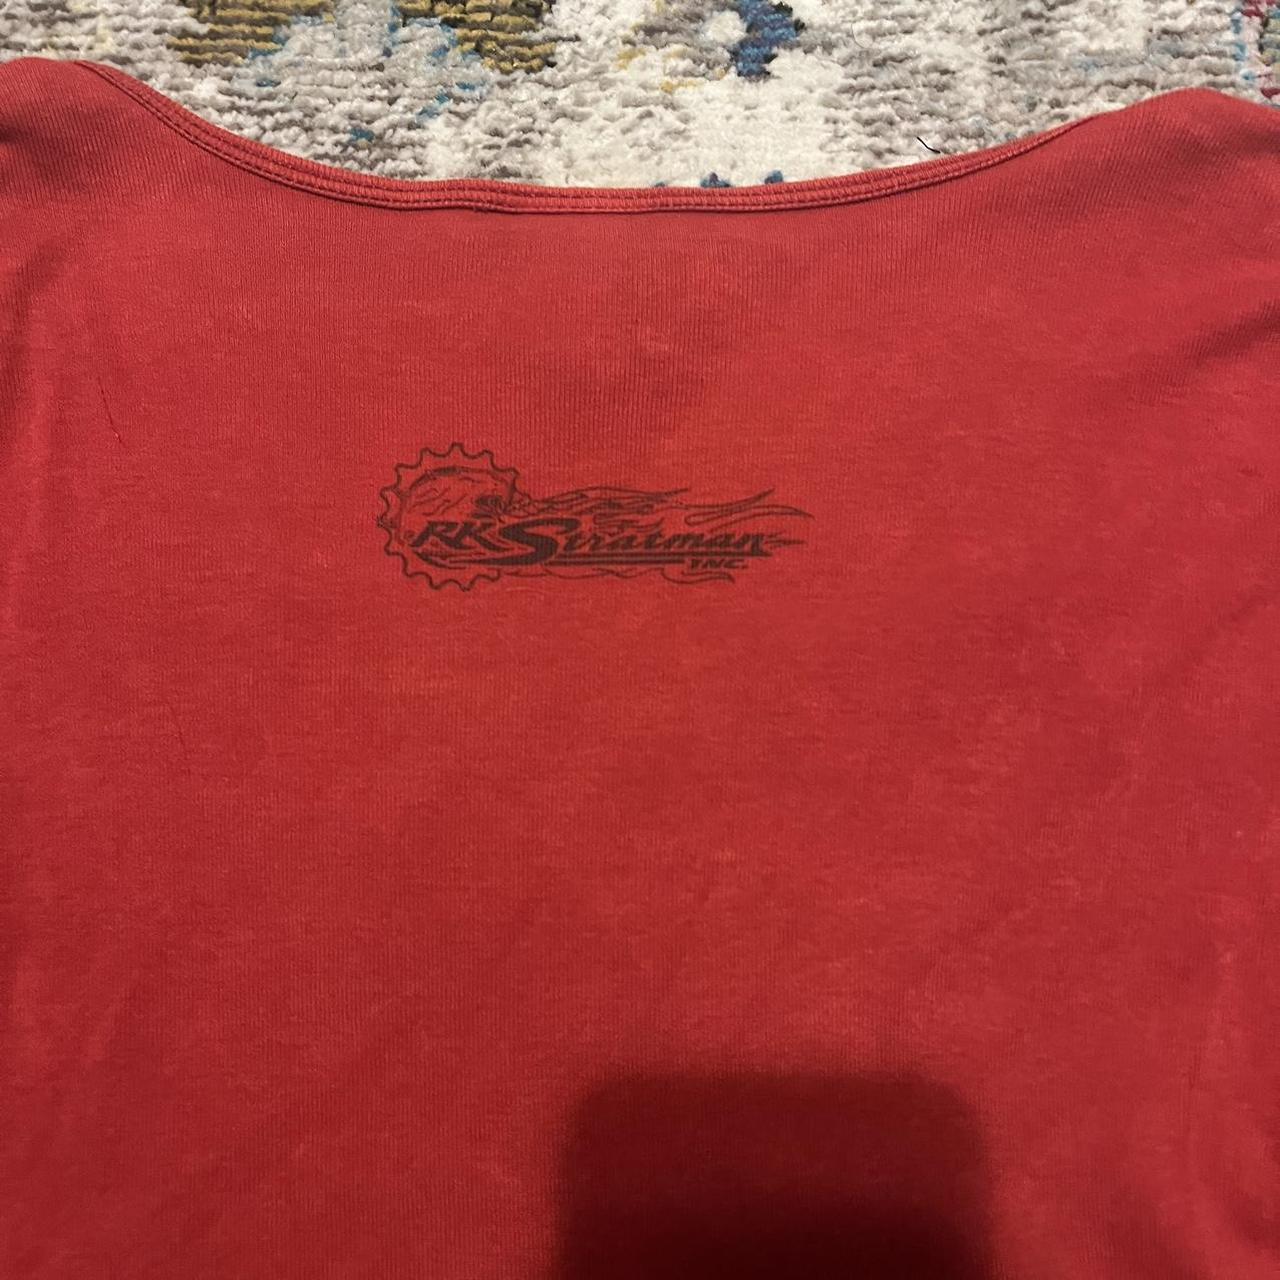 Harley Davidson Women's Red T-shirt (4)